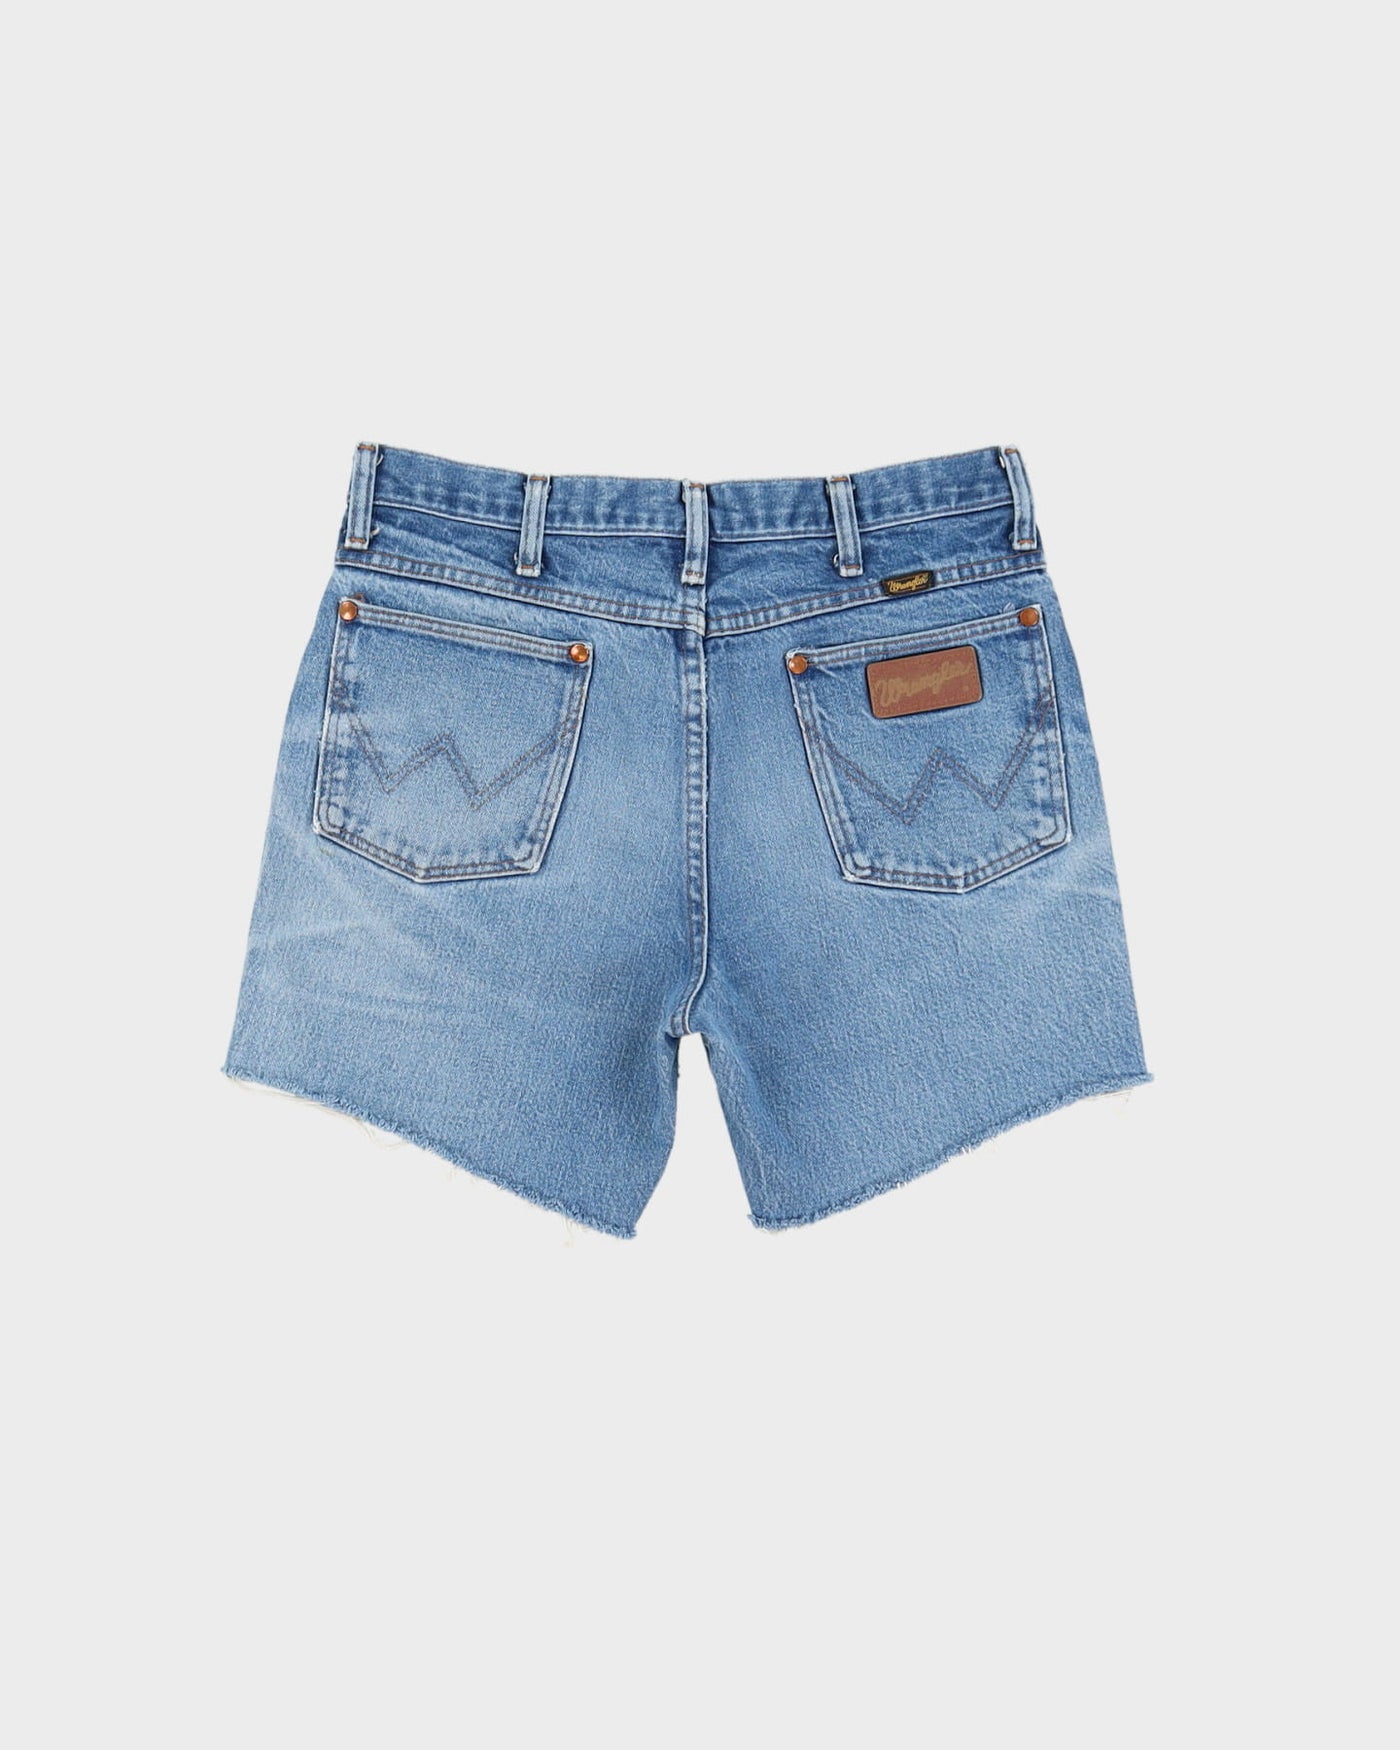 Vintage 90s Wrangler Blue Denim Shorts - W29